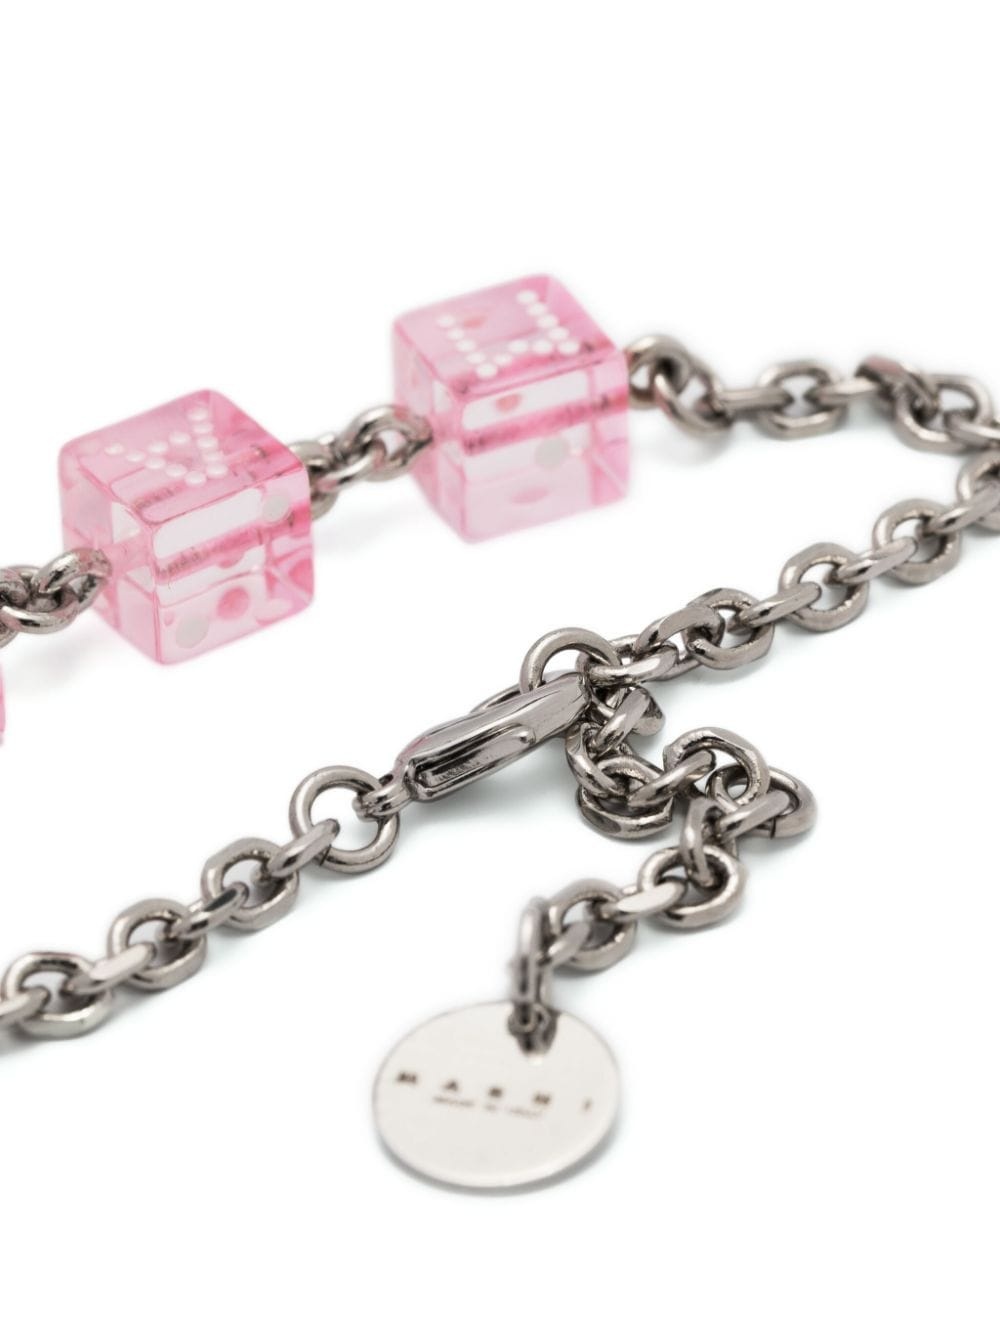 dice-shaped charm bracelet - 3